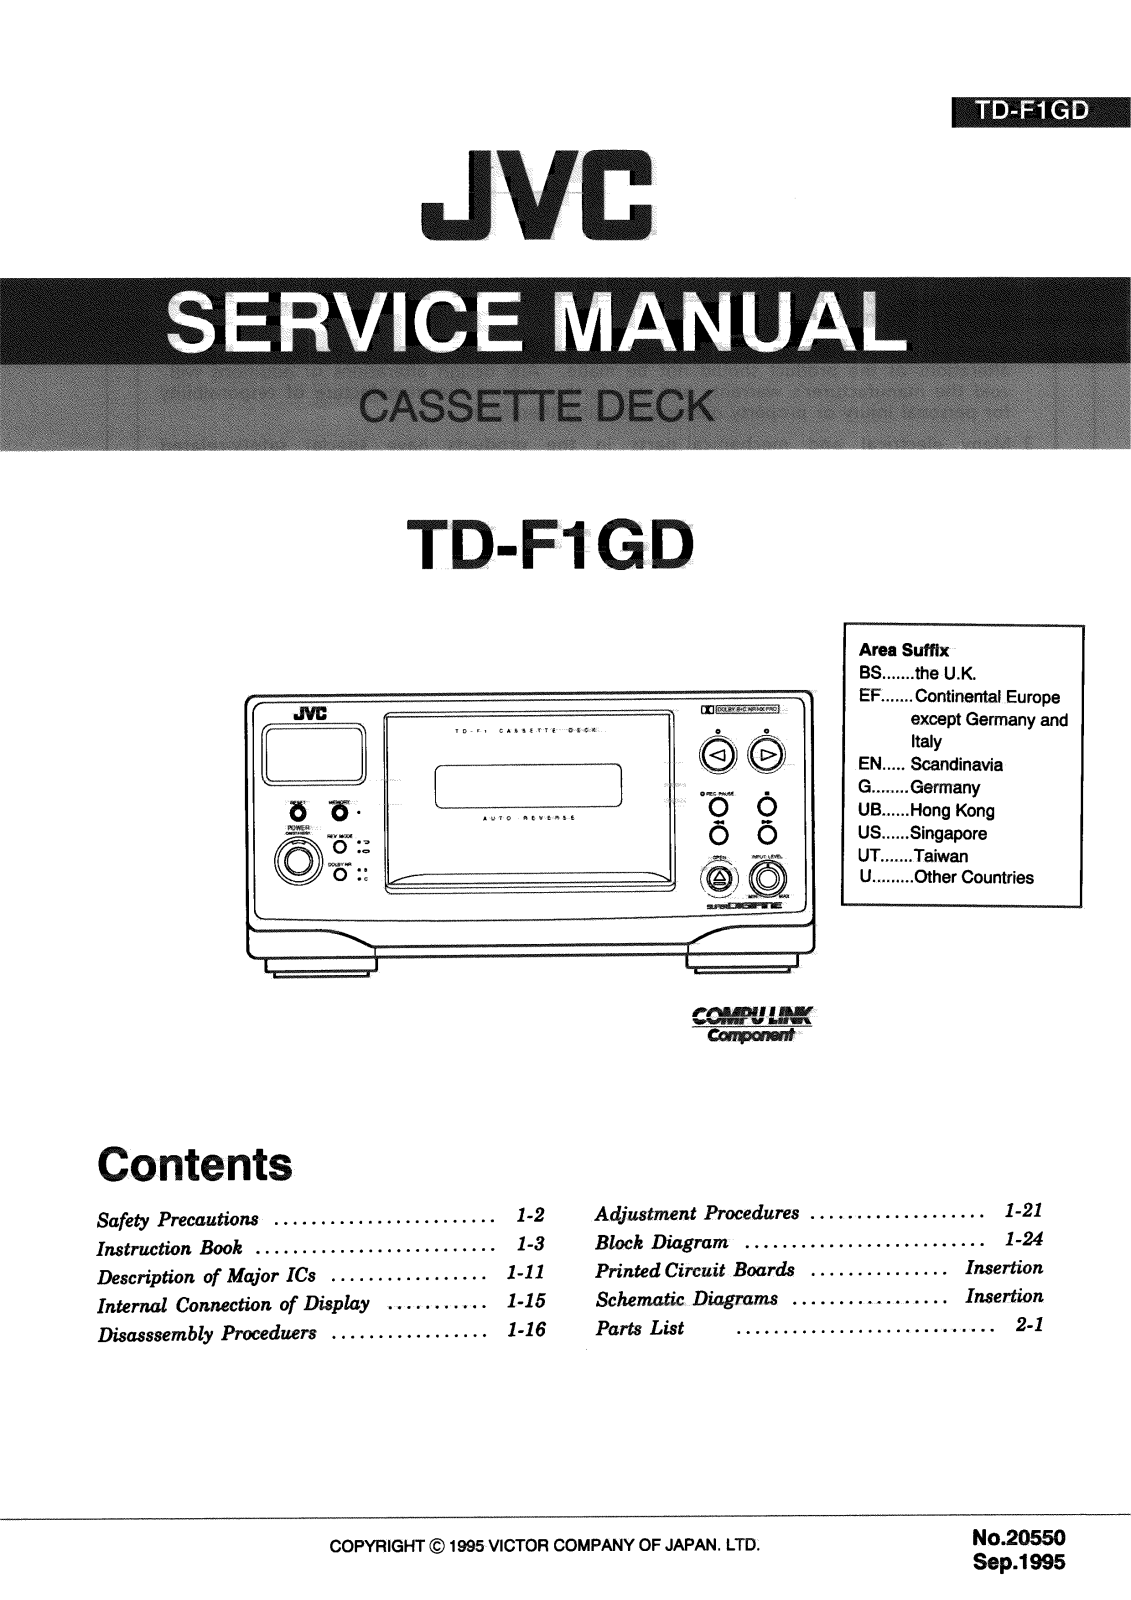 JVC TDF-1-GD Service manual